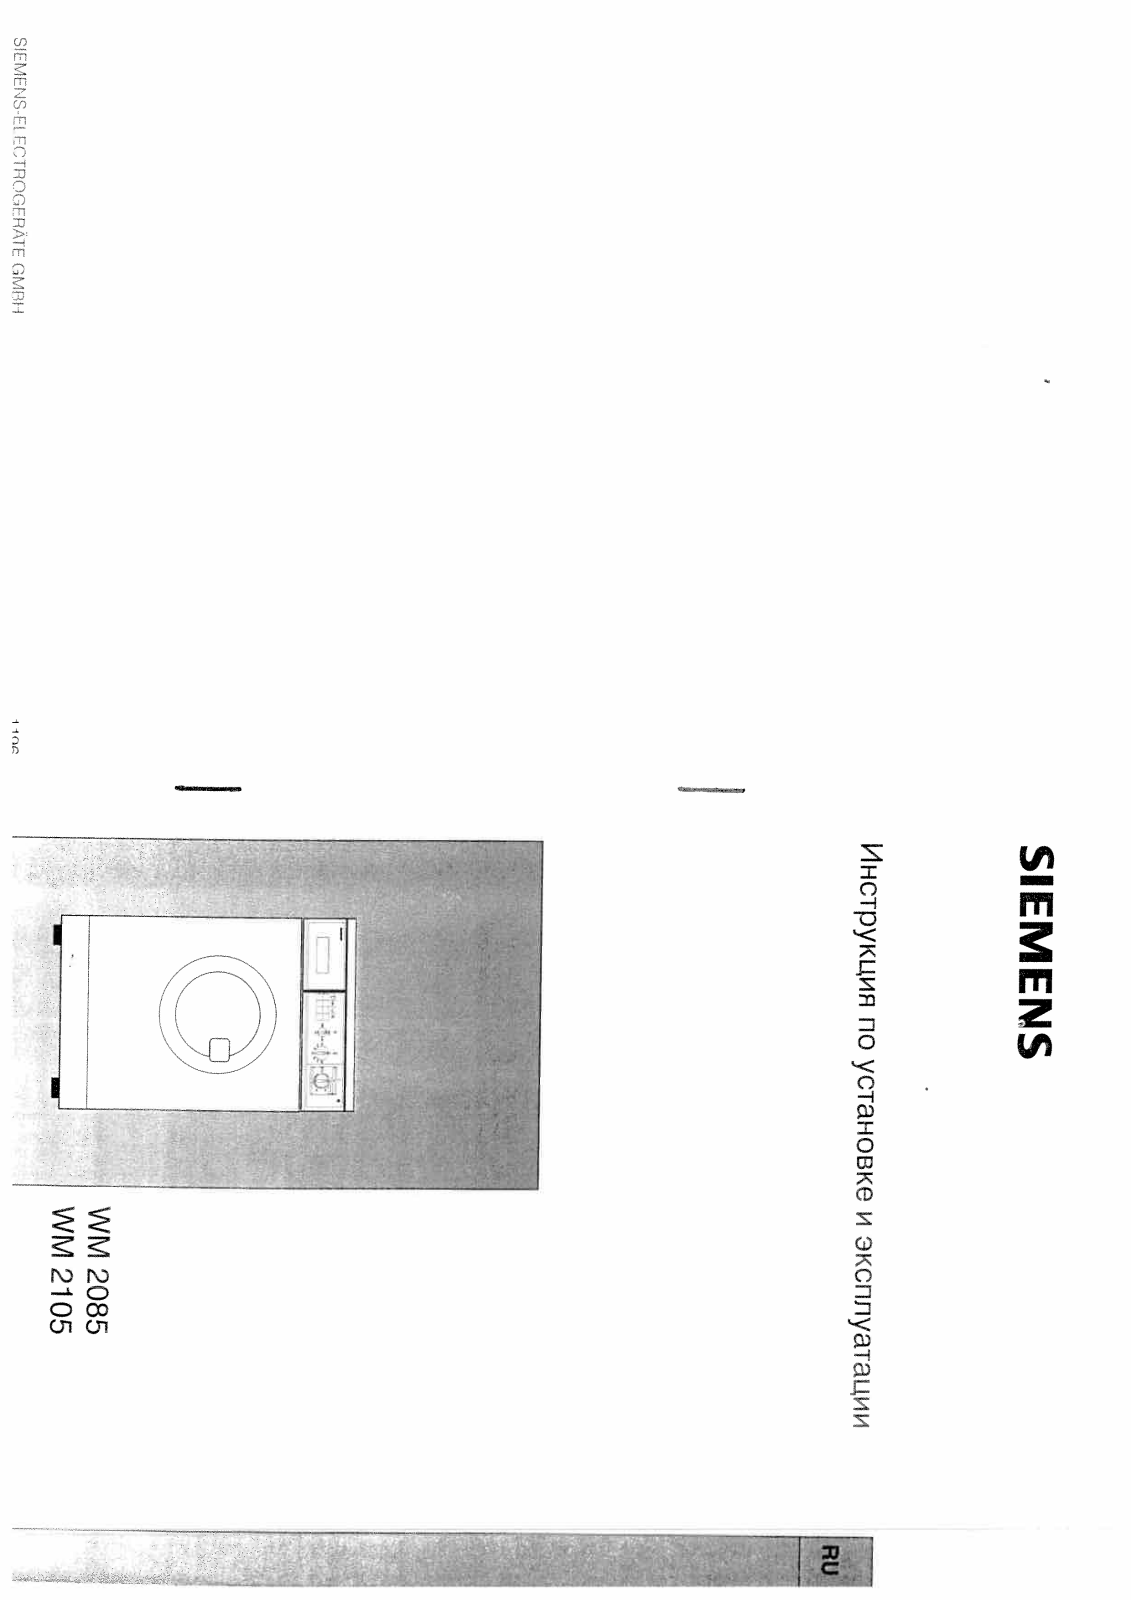 Siemens Siwamat 2085, Siwamat 2105, Siwamat WM 2085, Siwamat WM 2105 User Manual